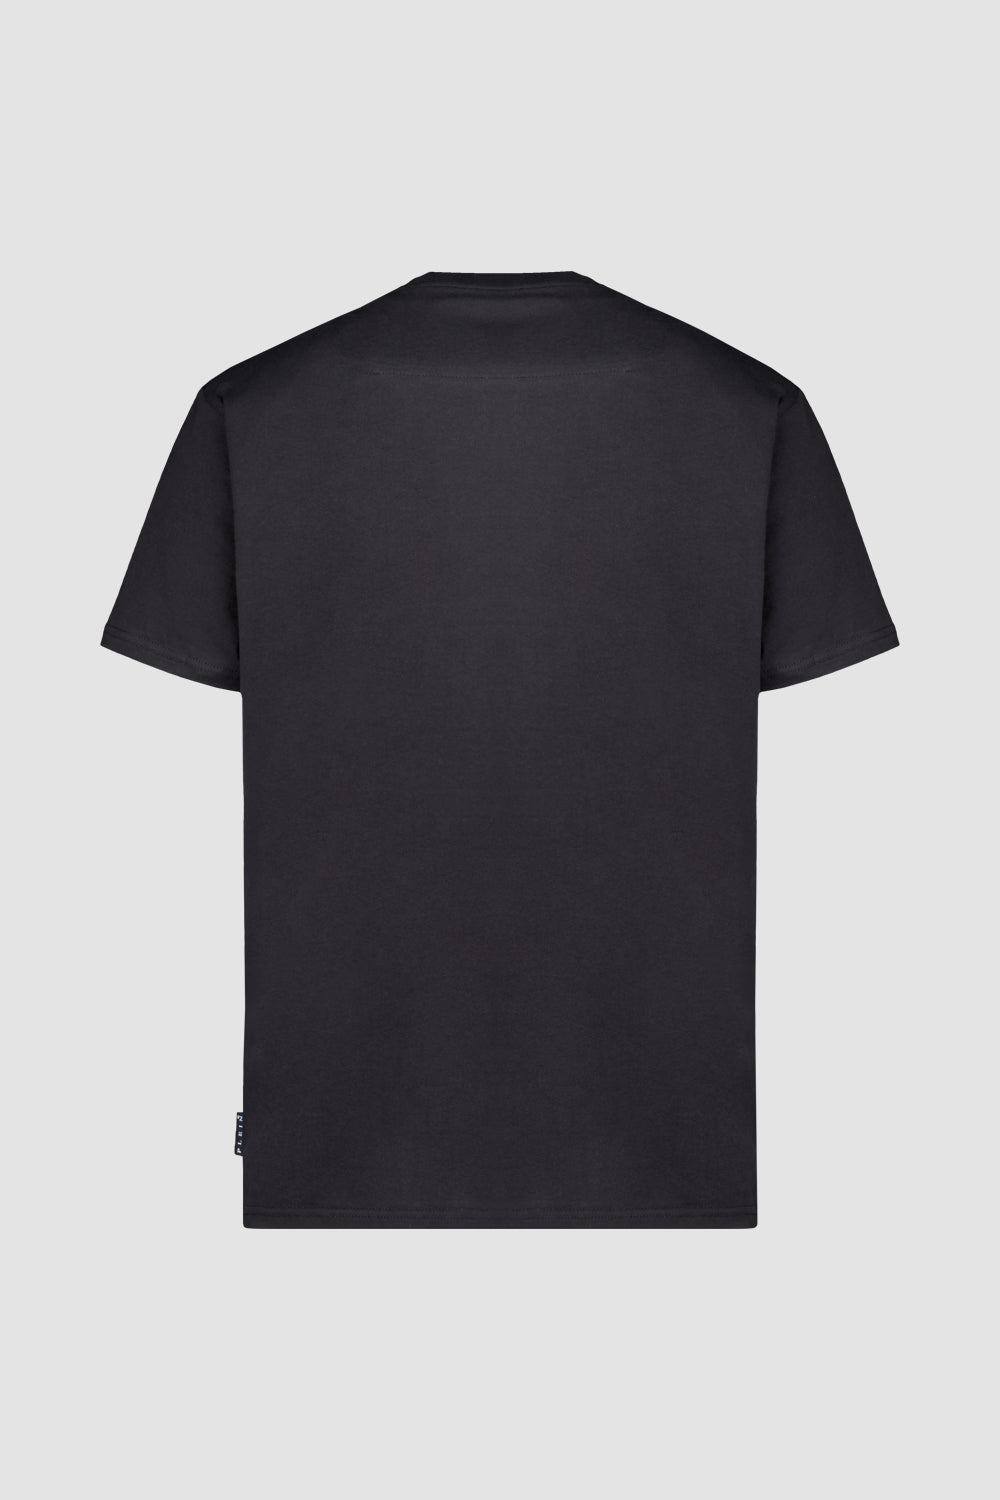 Philipp Plein Black Round neck SS Iconic Plein T-Shirt